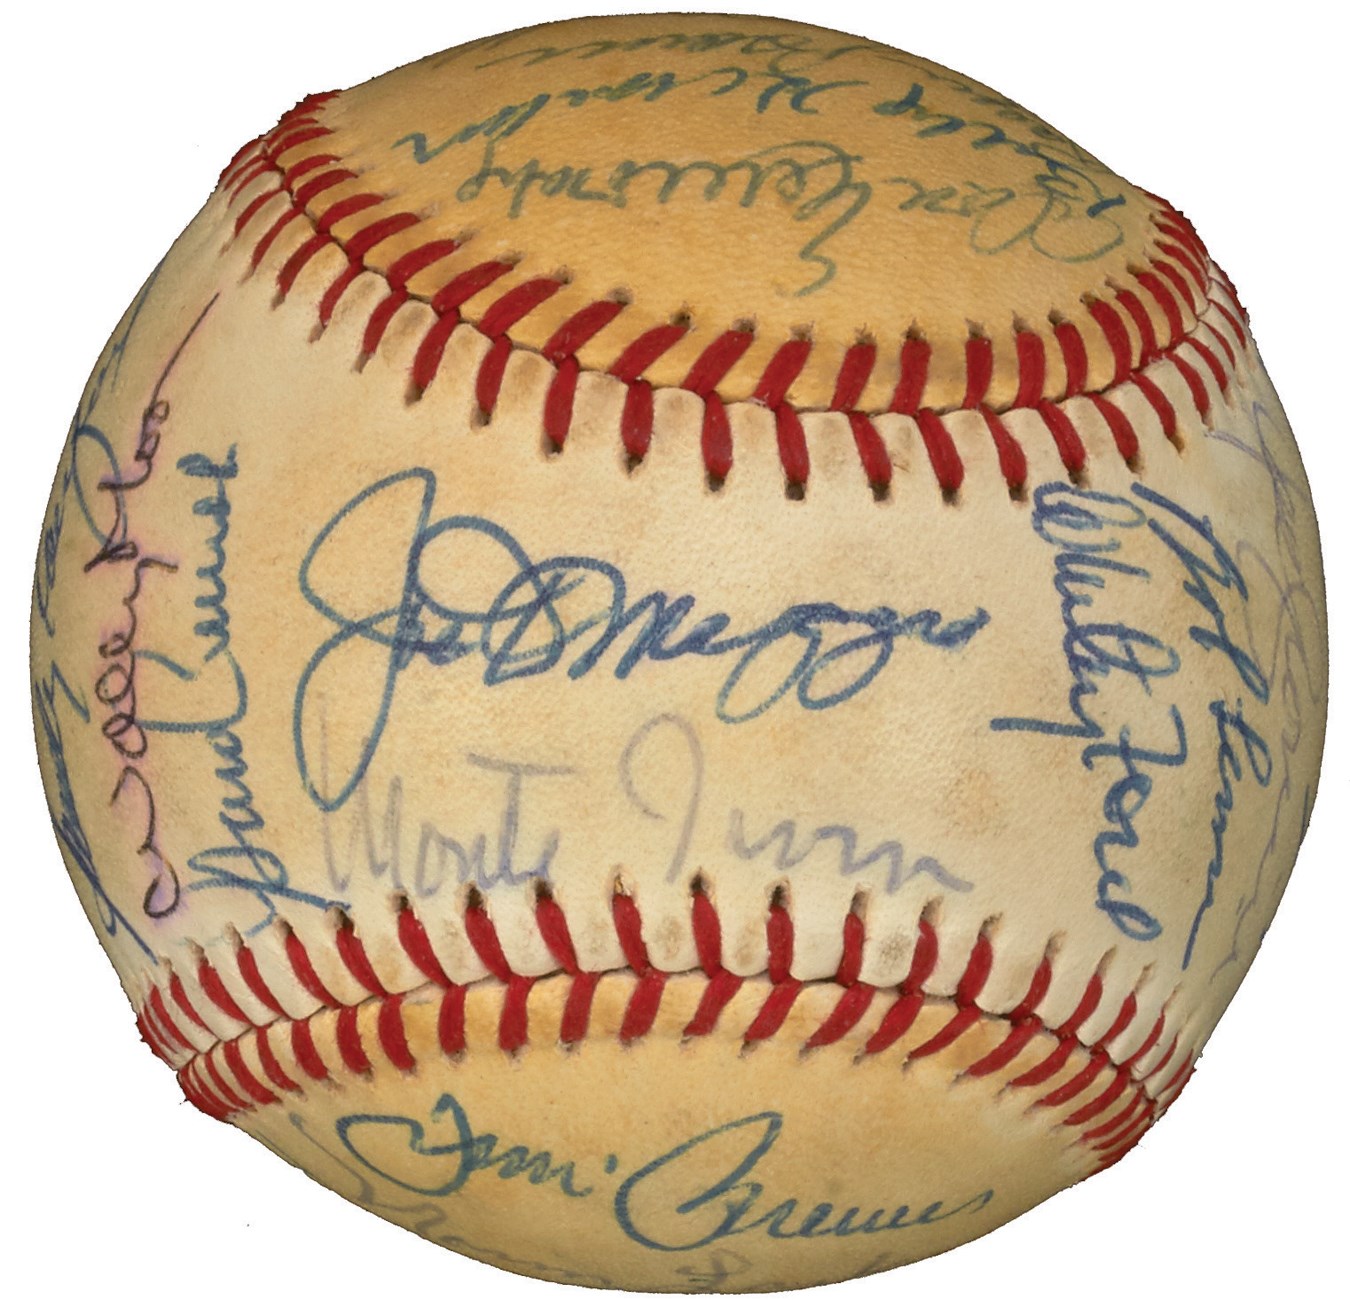 Baseball Autographs - Hall Of Fame Signed Baseball with Maris, Koufax & (24)